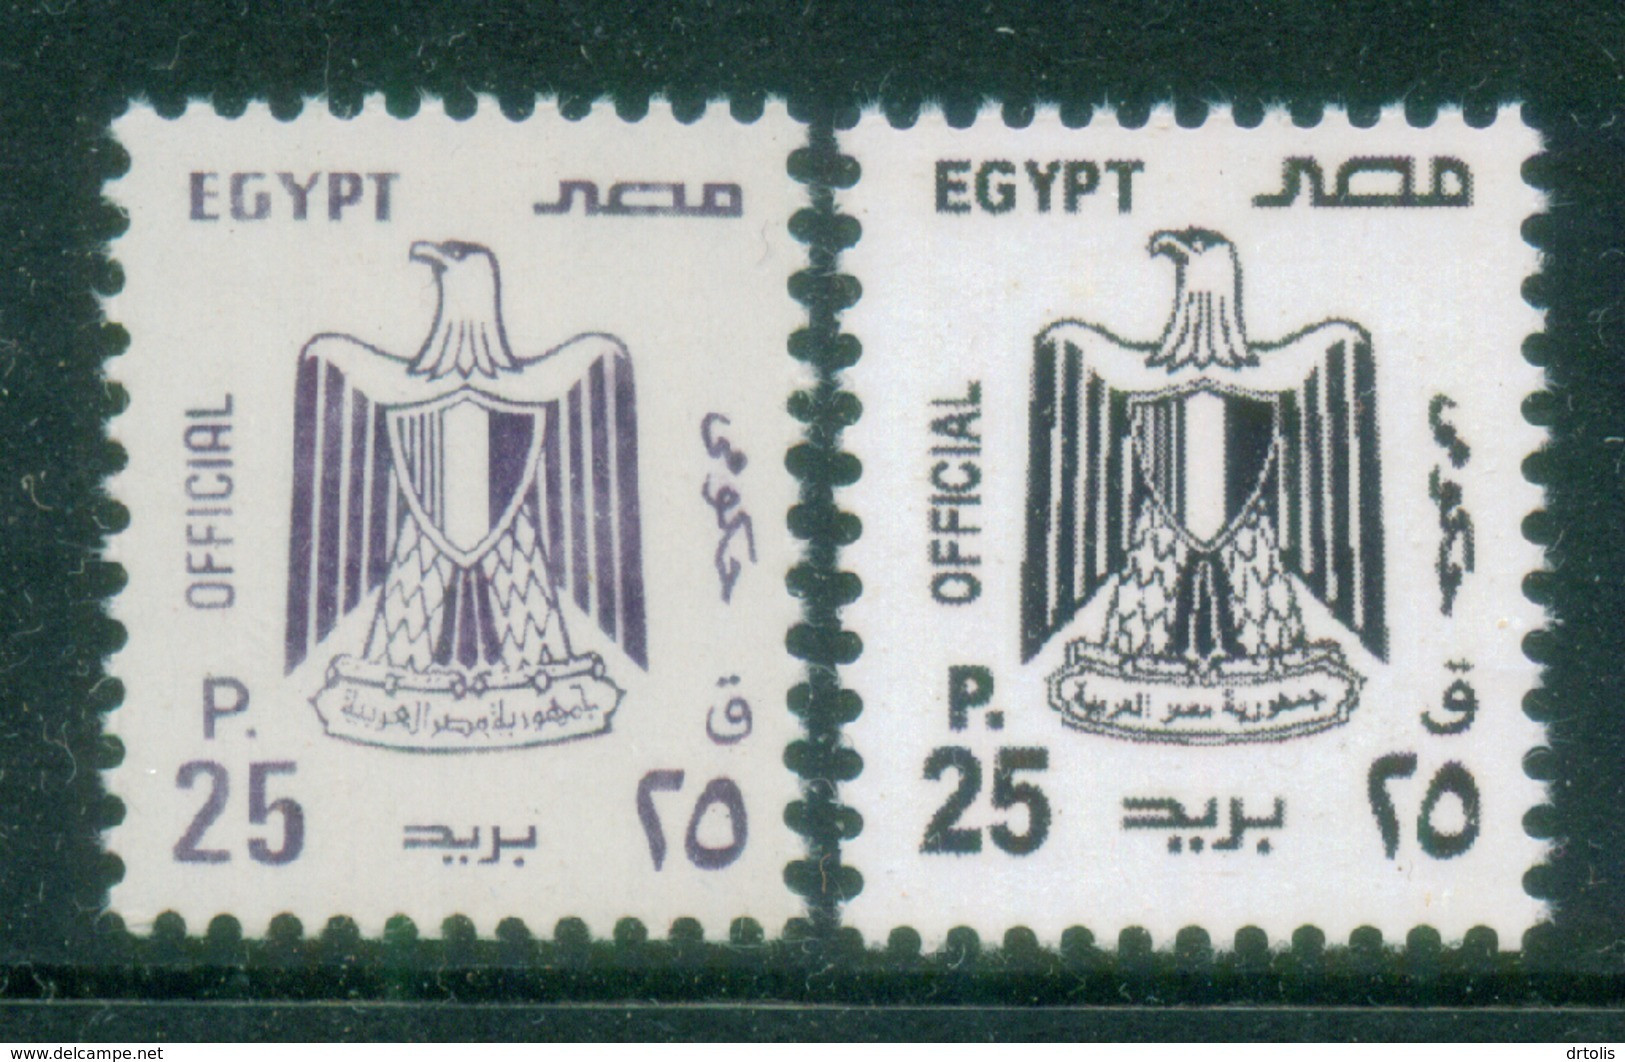 EGYPT / 2001 / OFFICIAL / 25 PT / NO WMK / VERY RARE : TYPE I & II / MNH / VF - Ungebraucht